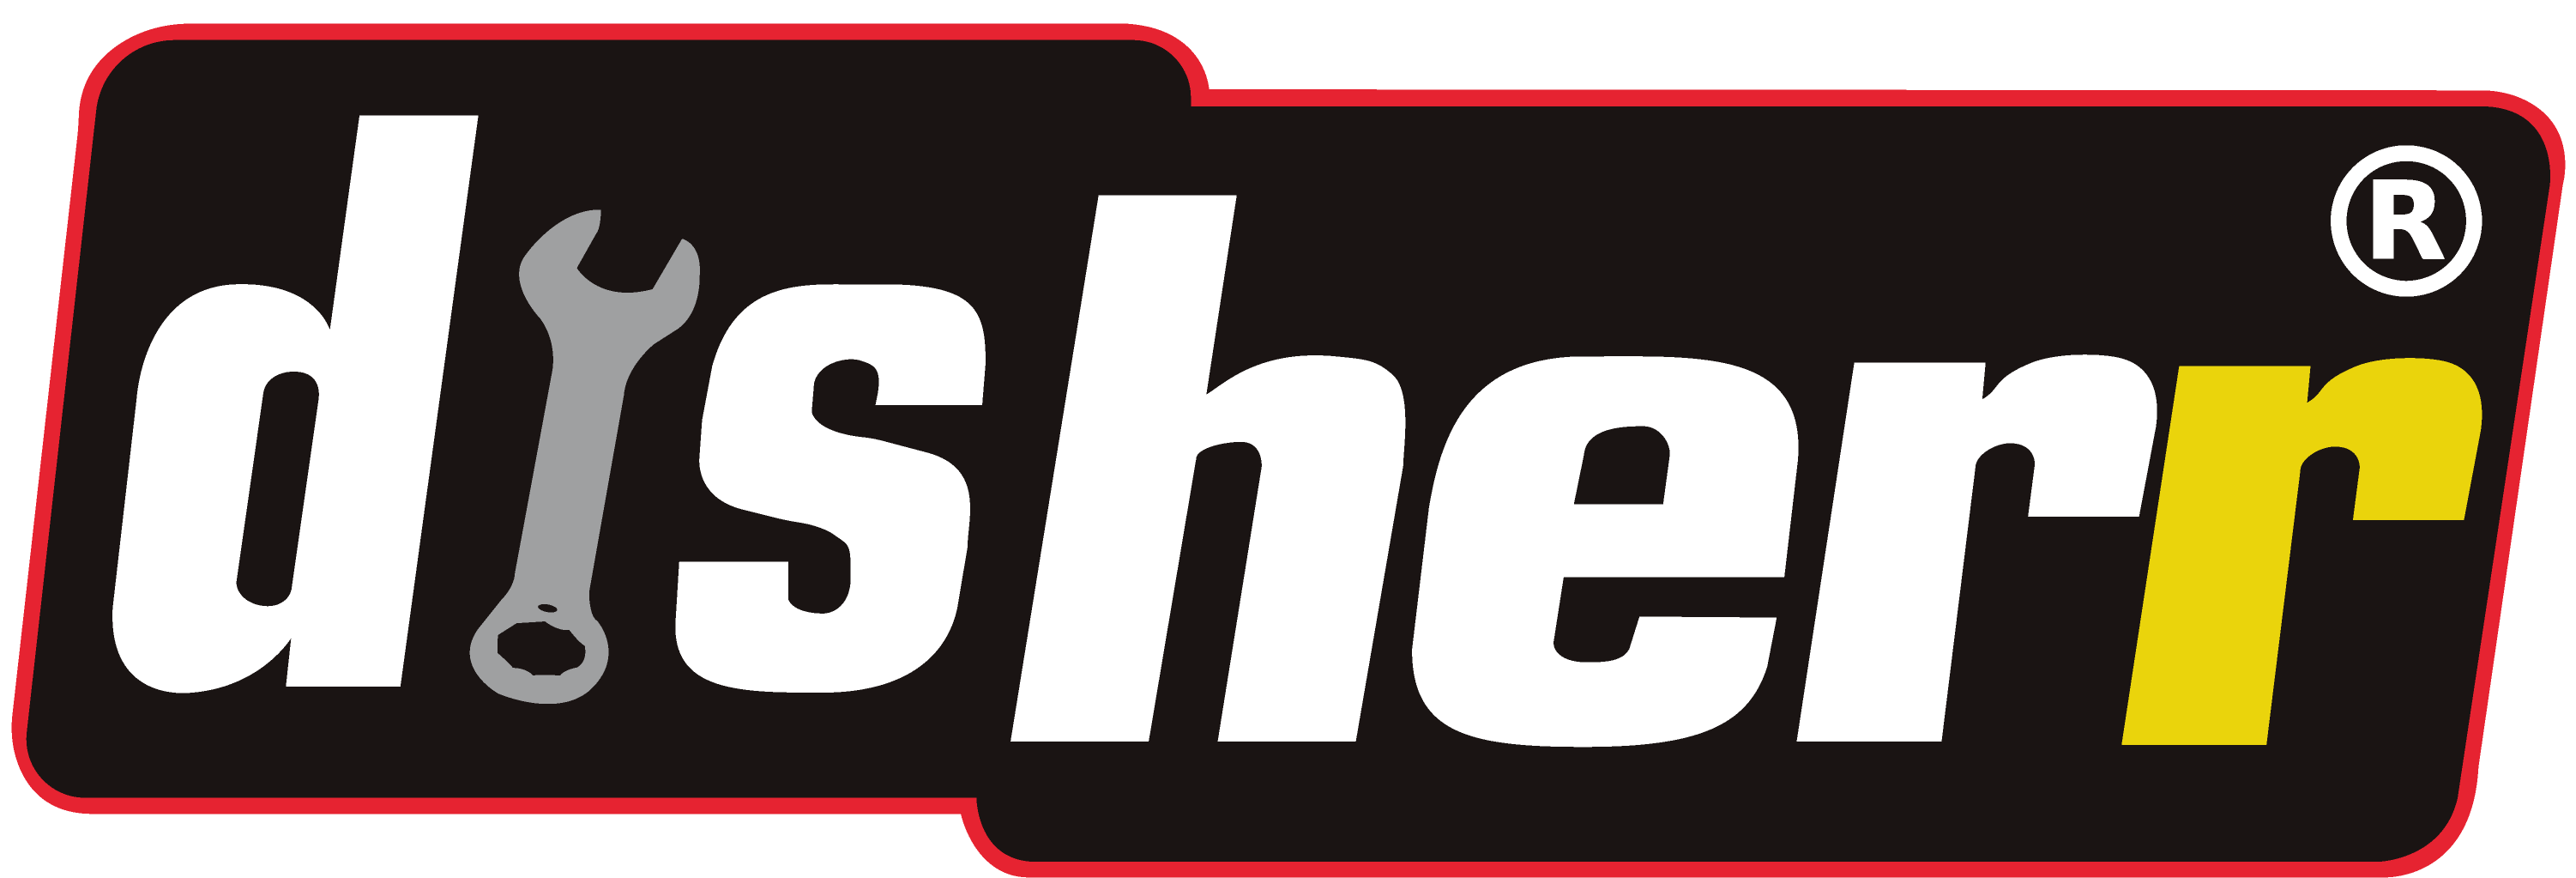 Logo de Disherr